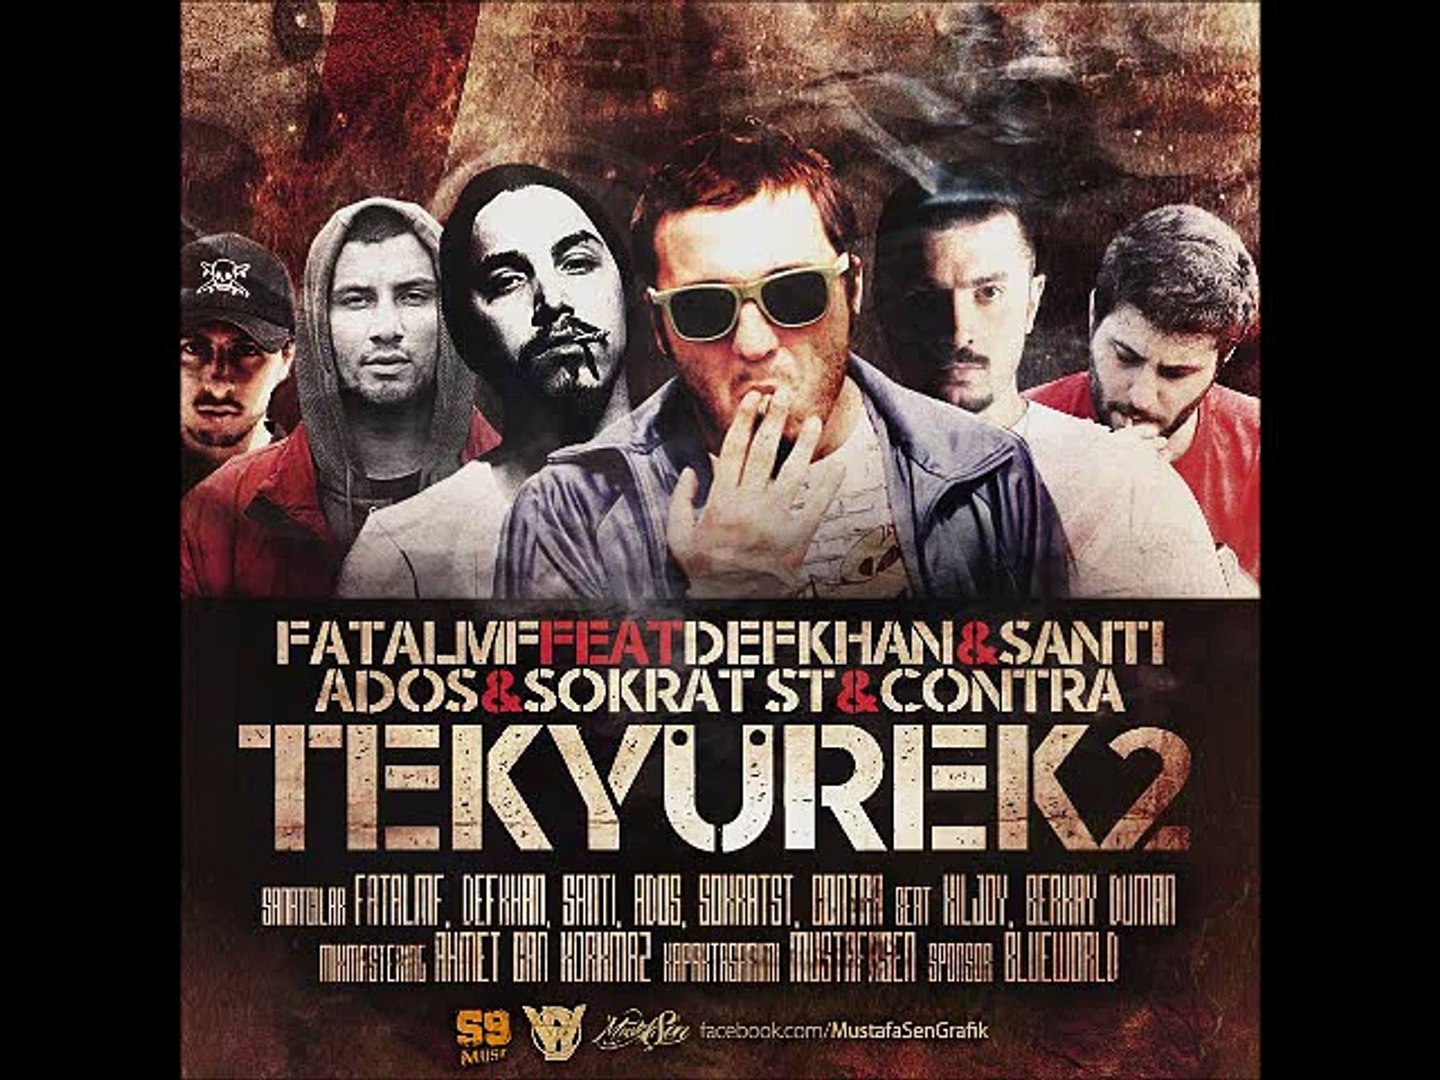 ⁣Fatal MF Feat. Ados, Defkhan, Contra, Santi, Sokrat St - Tek Yürek 2